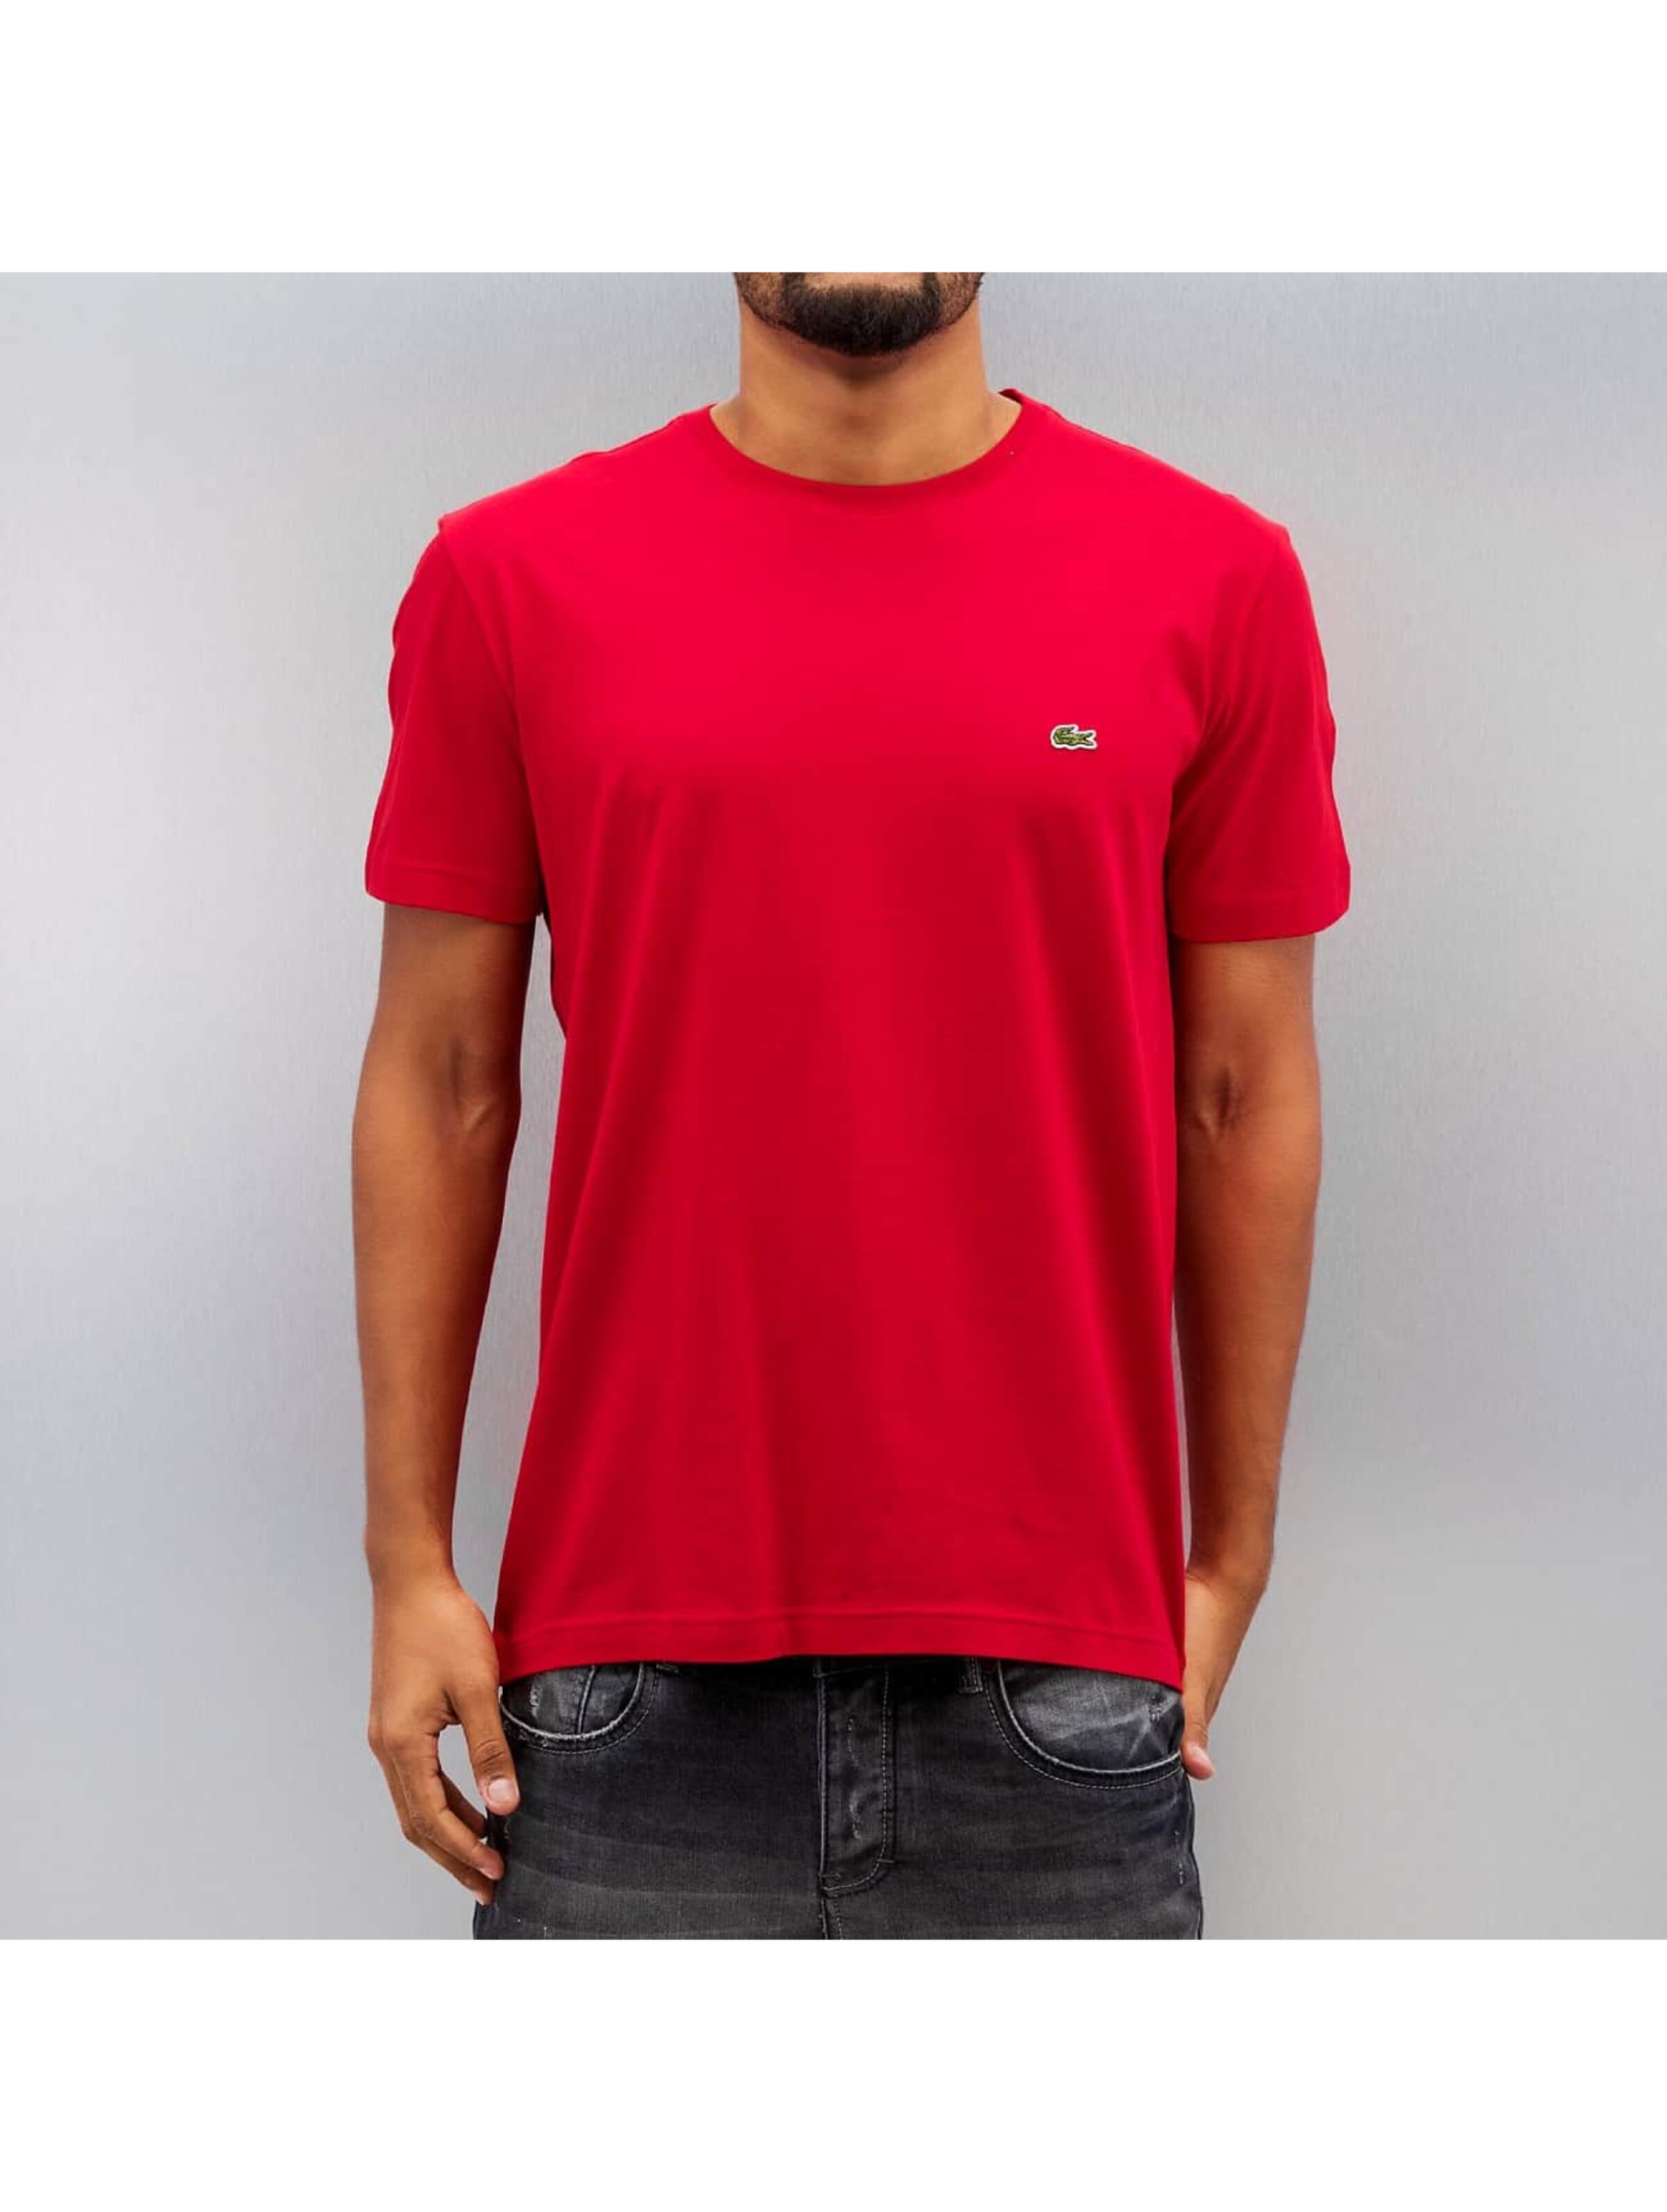 Lacoste Basic Sport Round Neck T-Shirt Mannen op kleur rood, Maat L